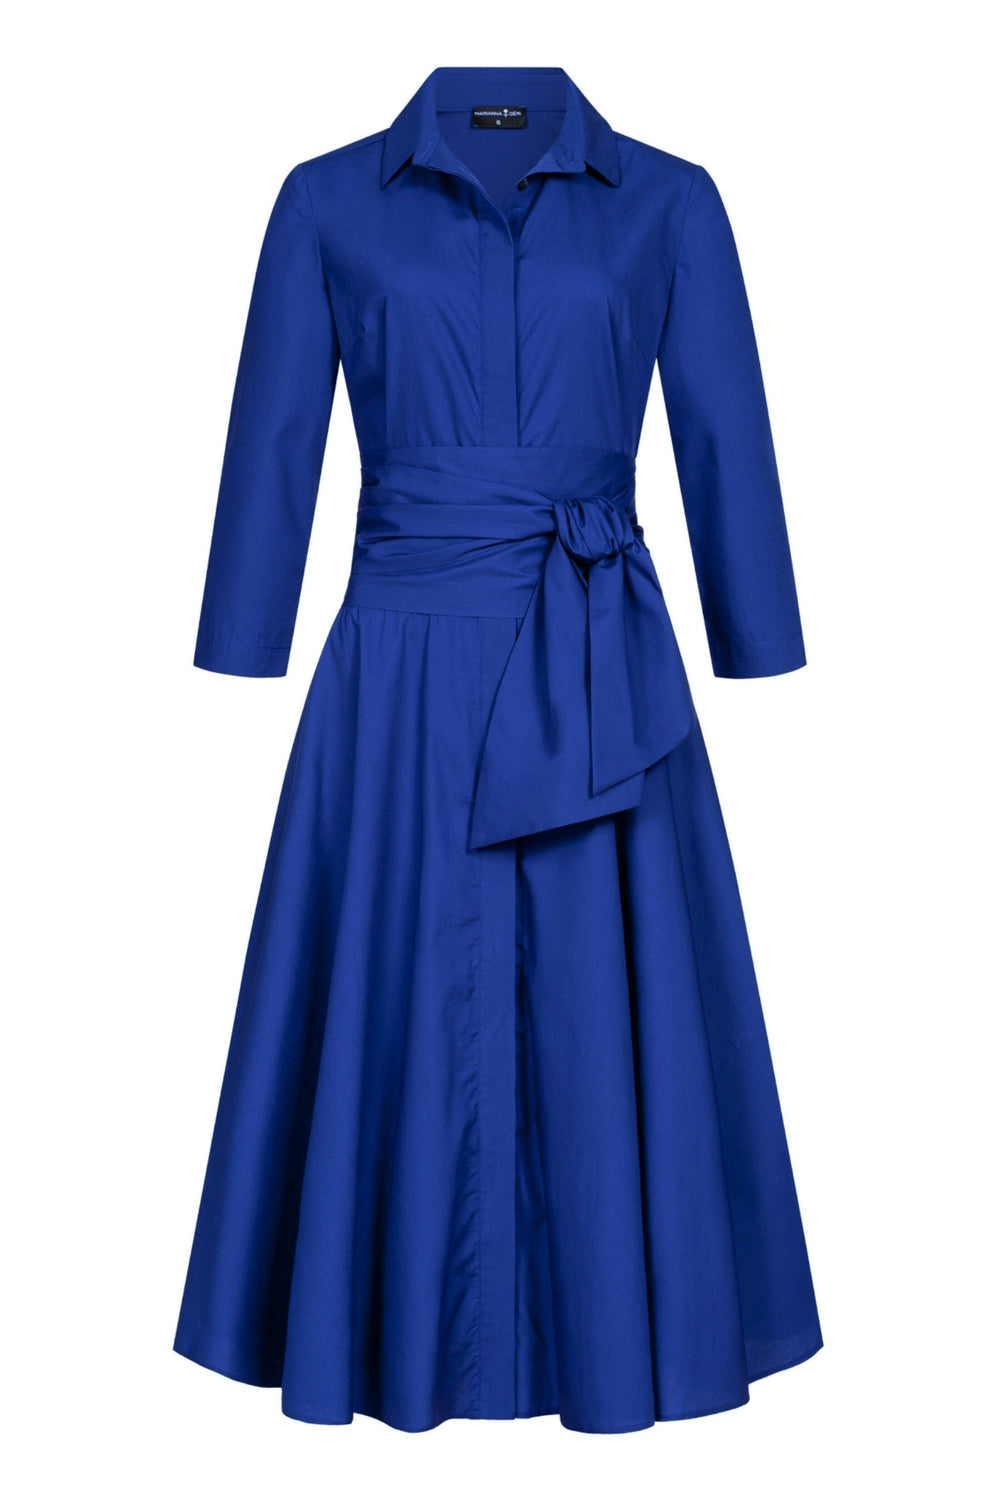 MARIANNA DÉRI | royal blue shirt dress in midi length with tie belt